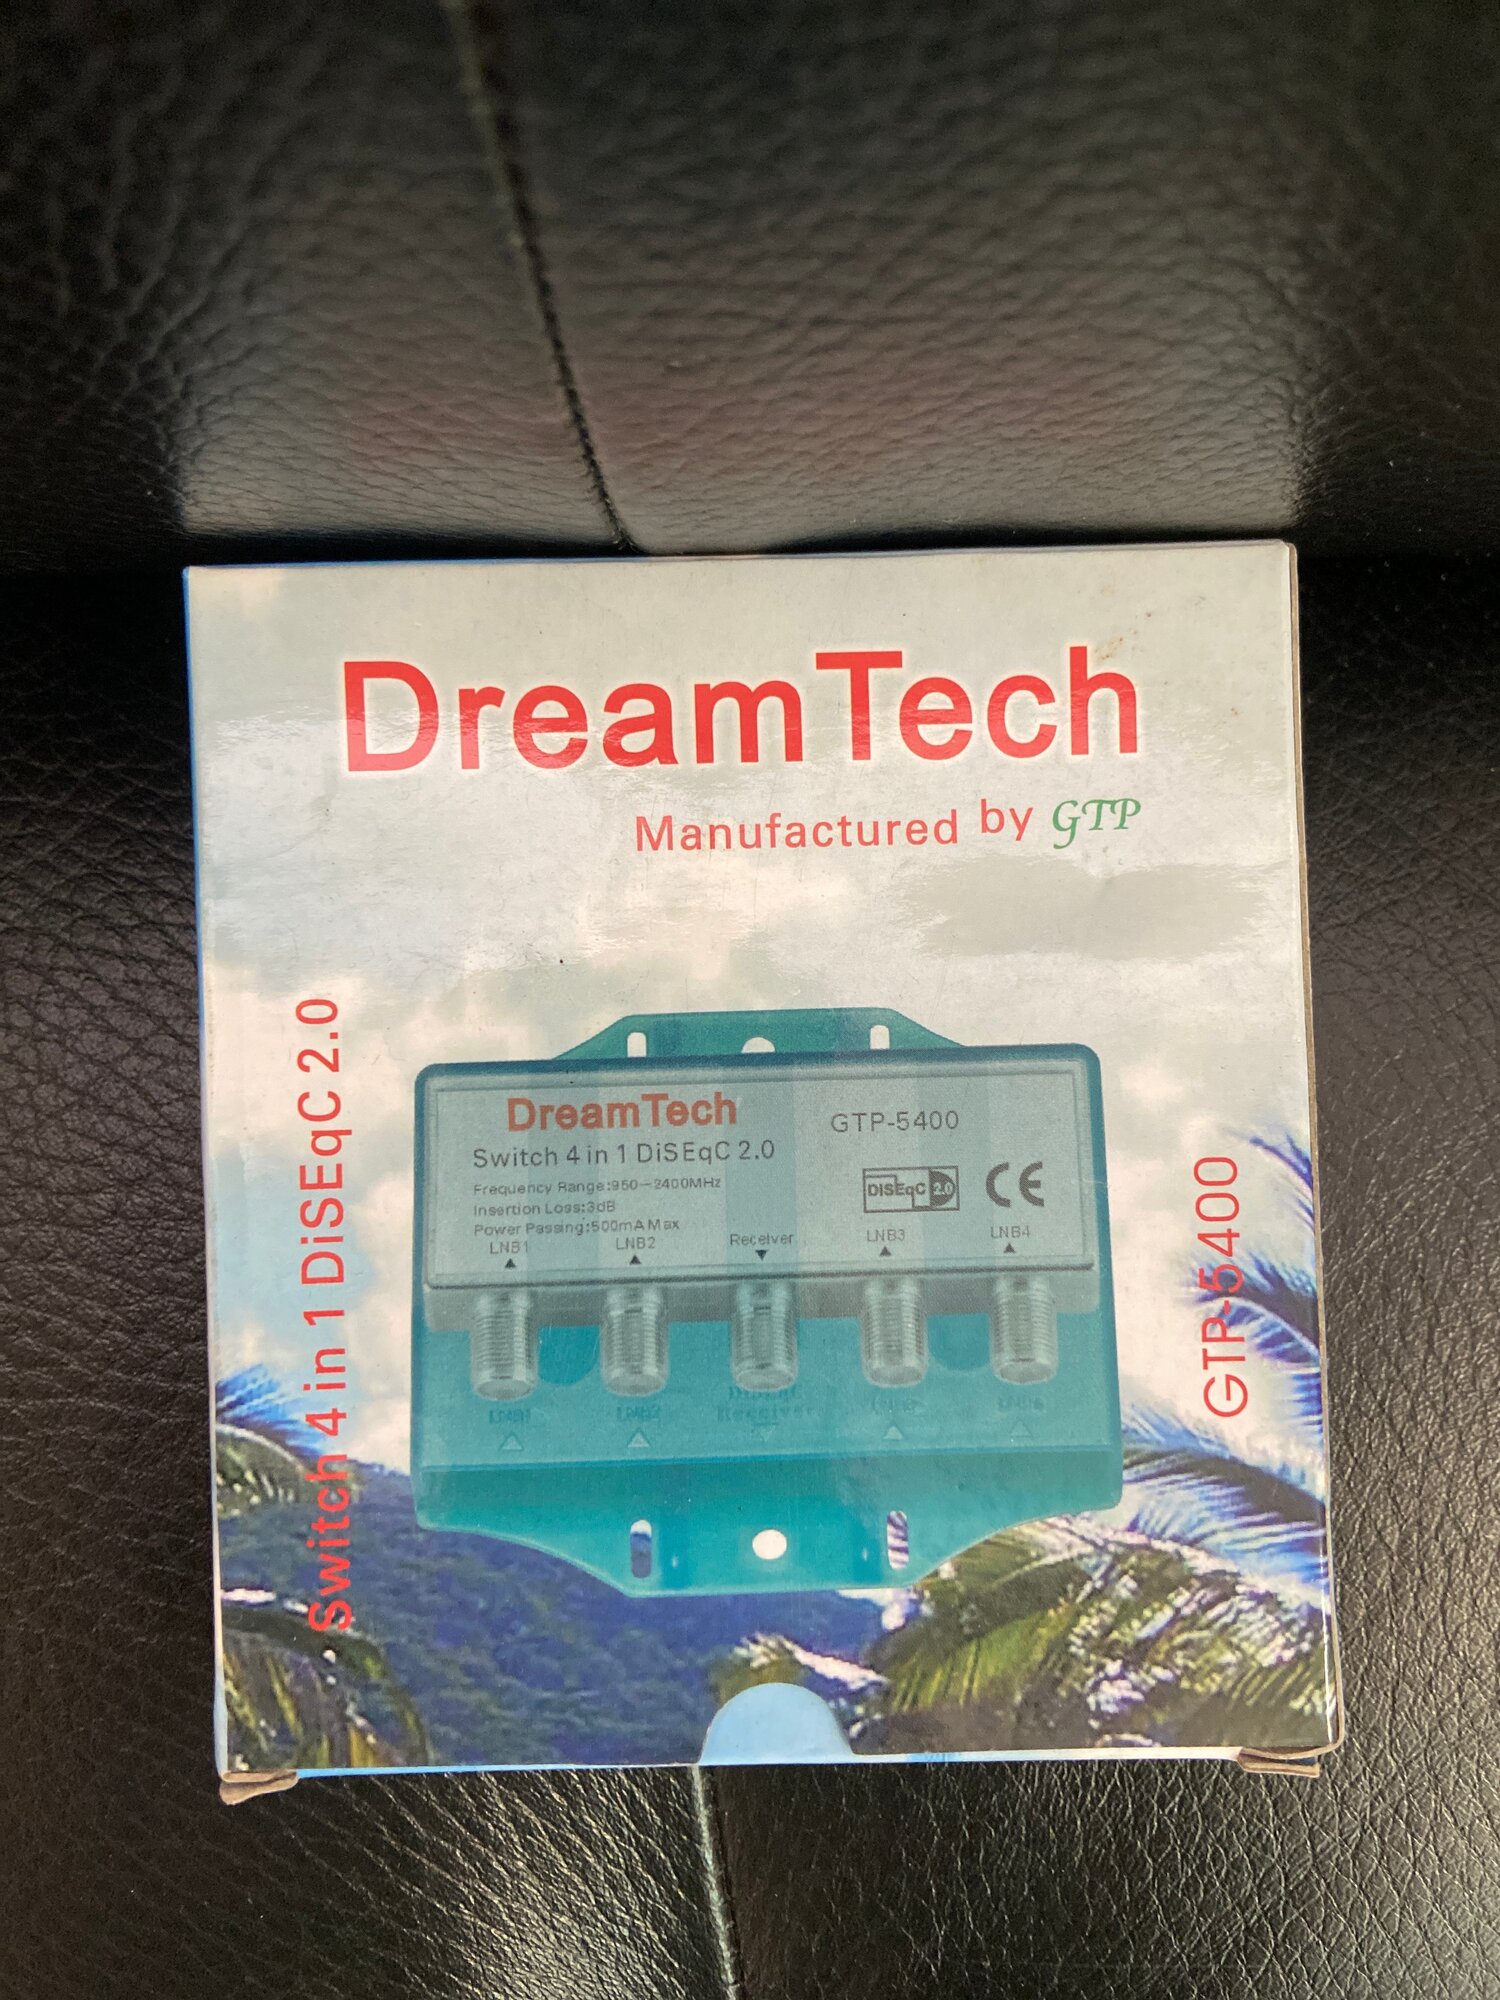 Дисек переключатель DiSEgC 4x1 GTP-5400 (DreamTech)